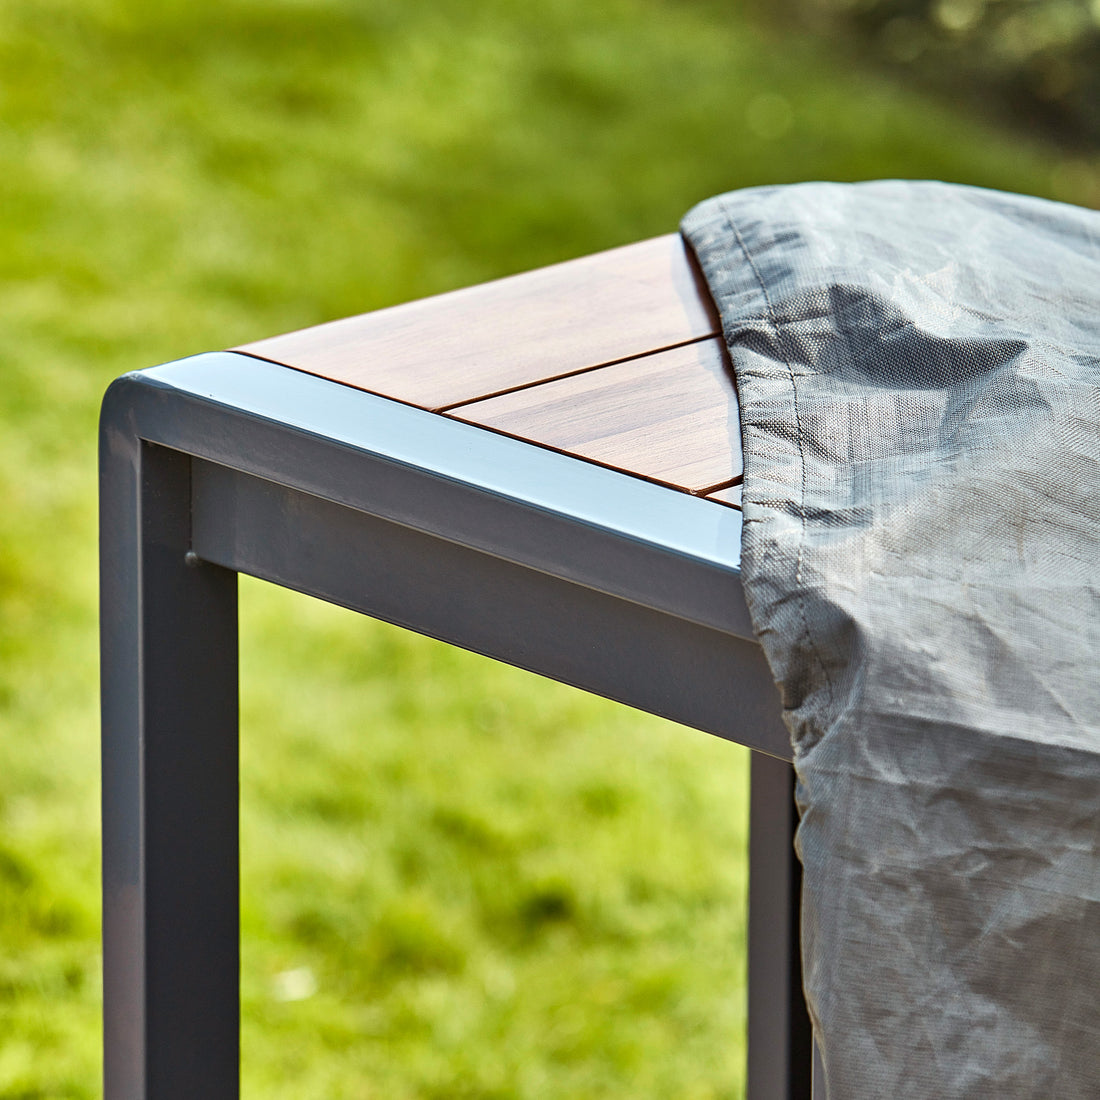 Waterproof Rectangular Furniture Set Cover In Eco-friendly Material